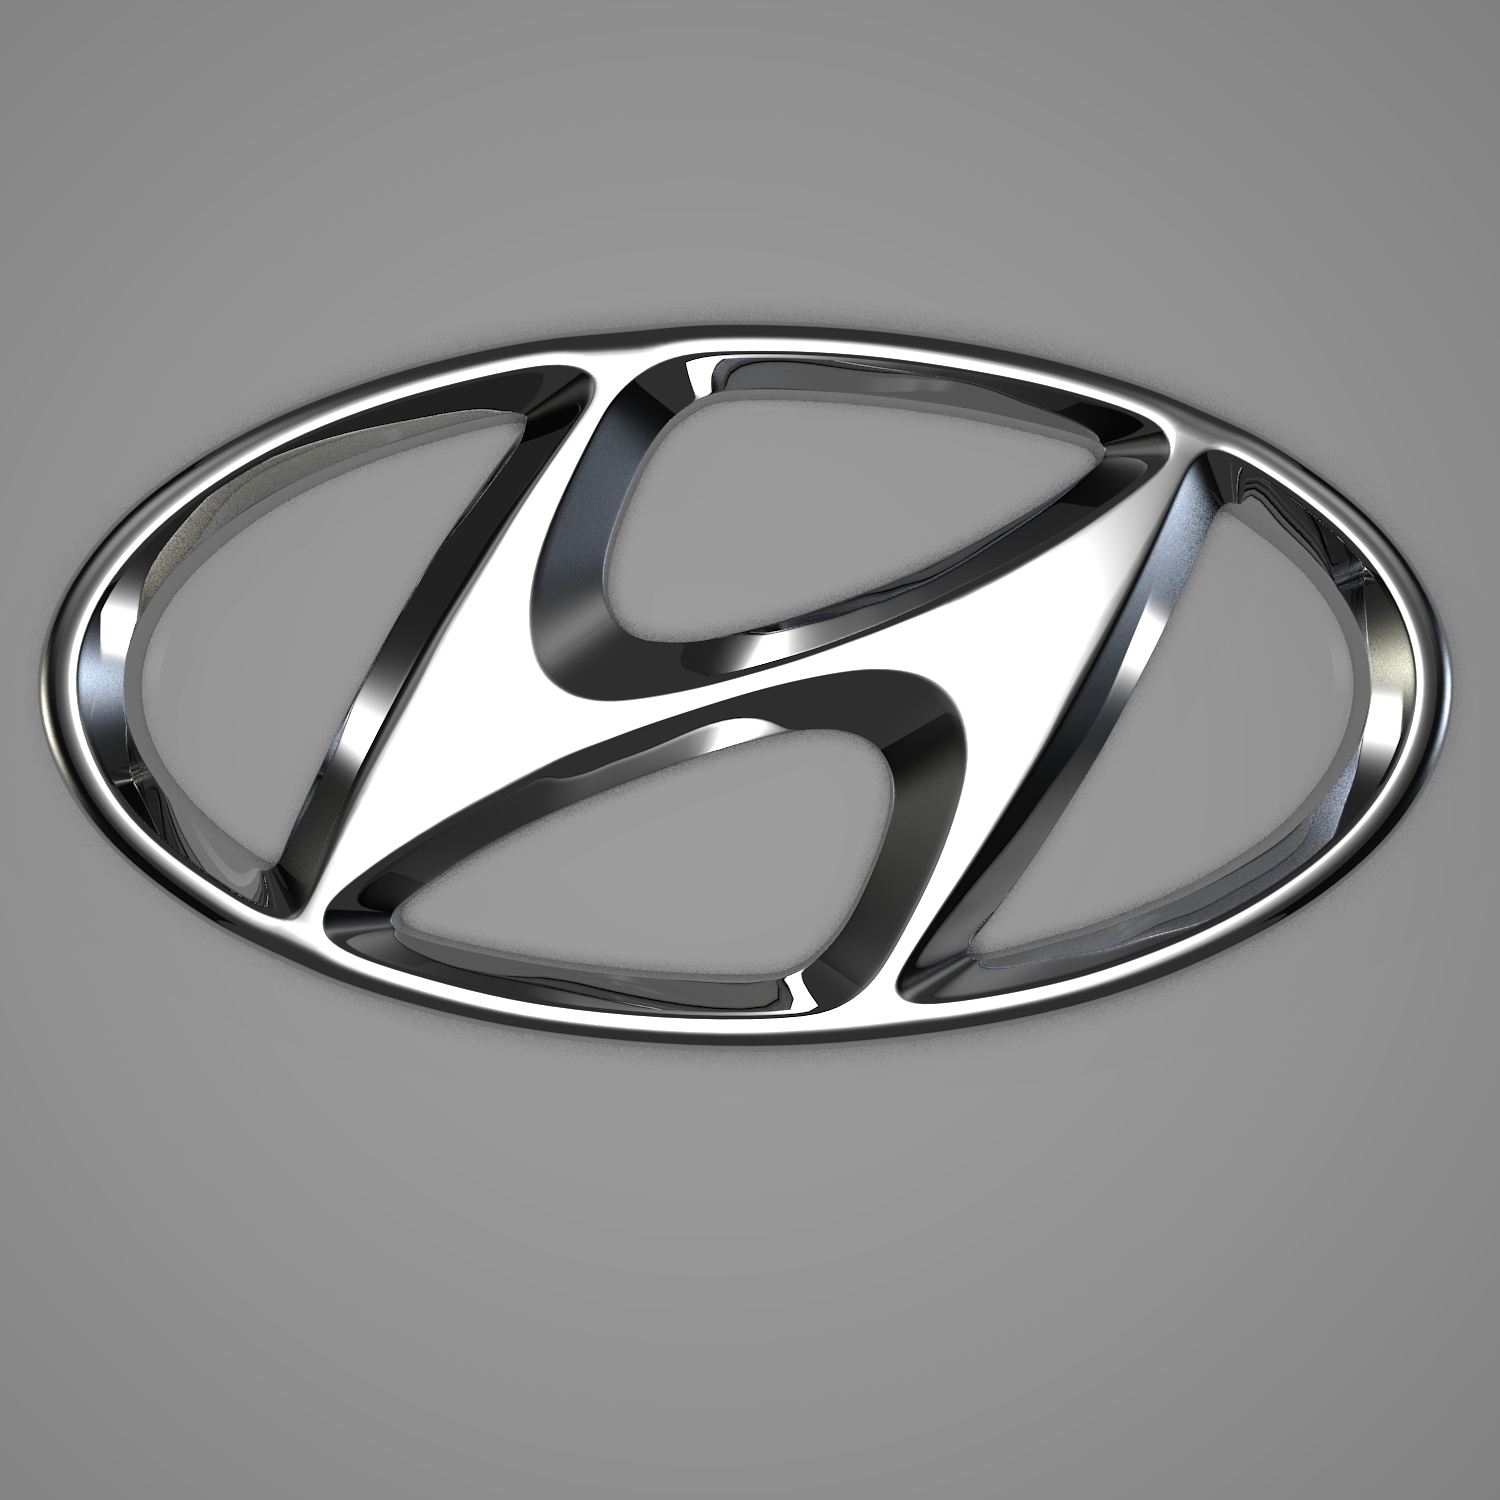 hyundai logo with silver background 342